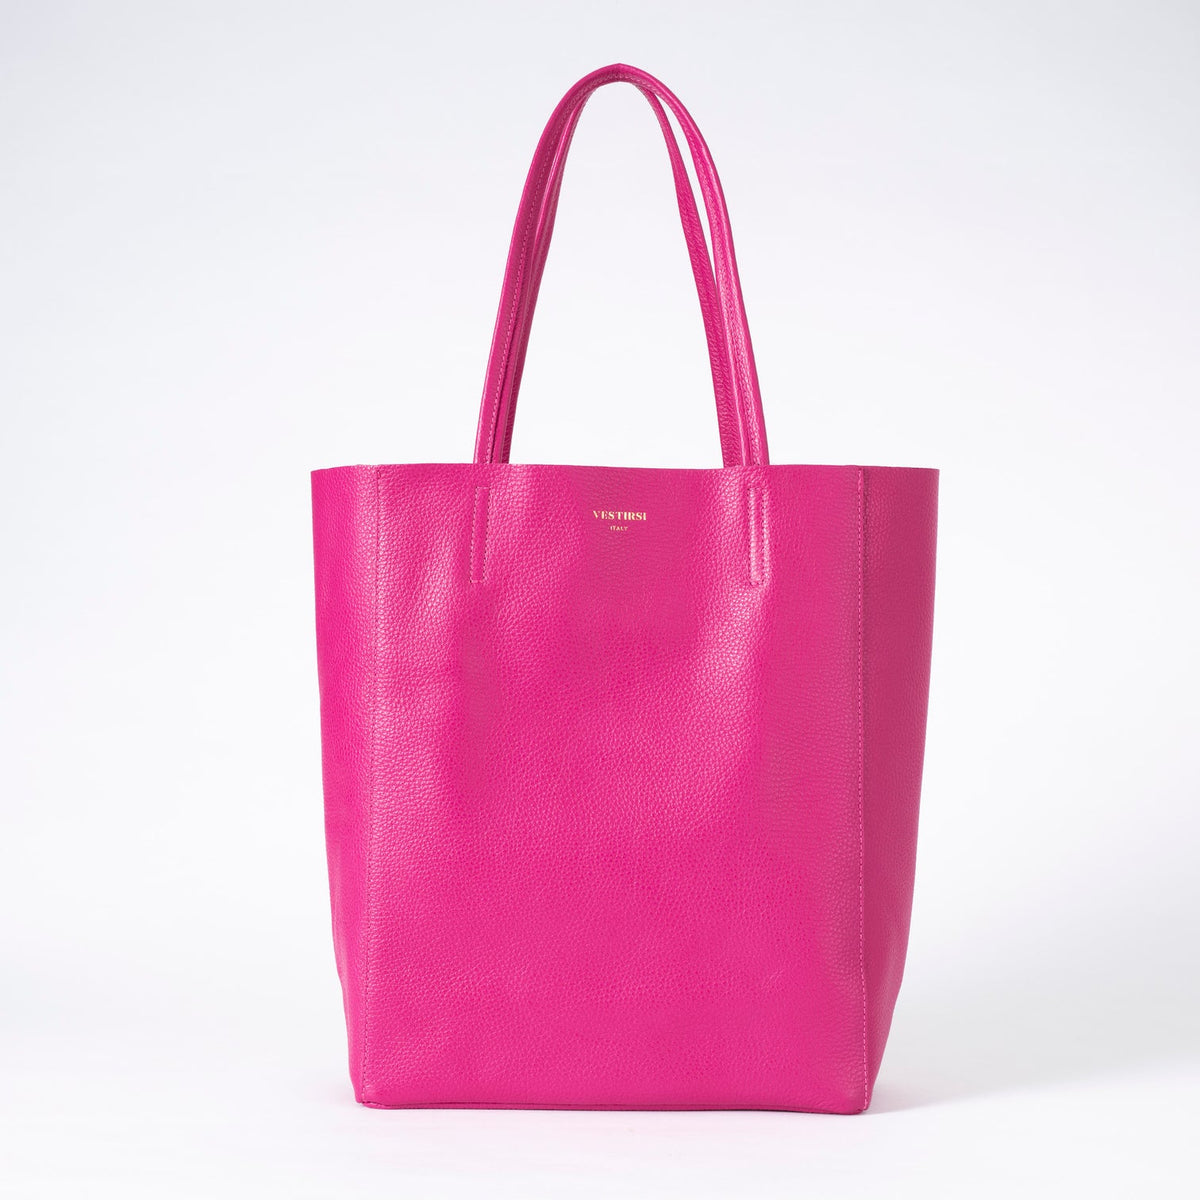 Bags & Accessories: Shop Bags Australia